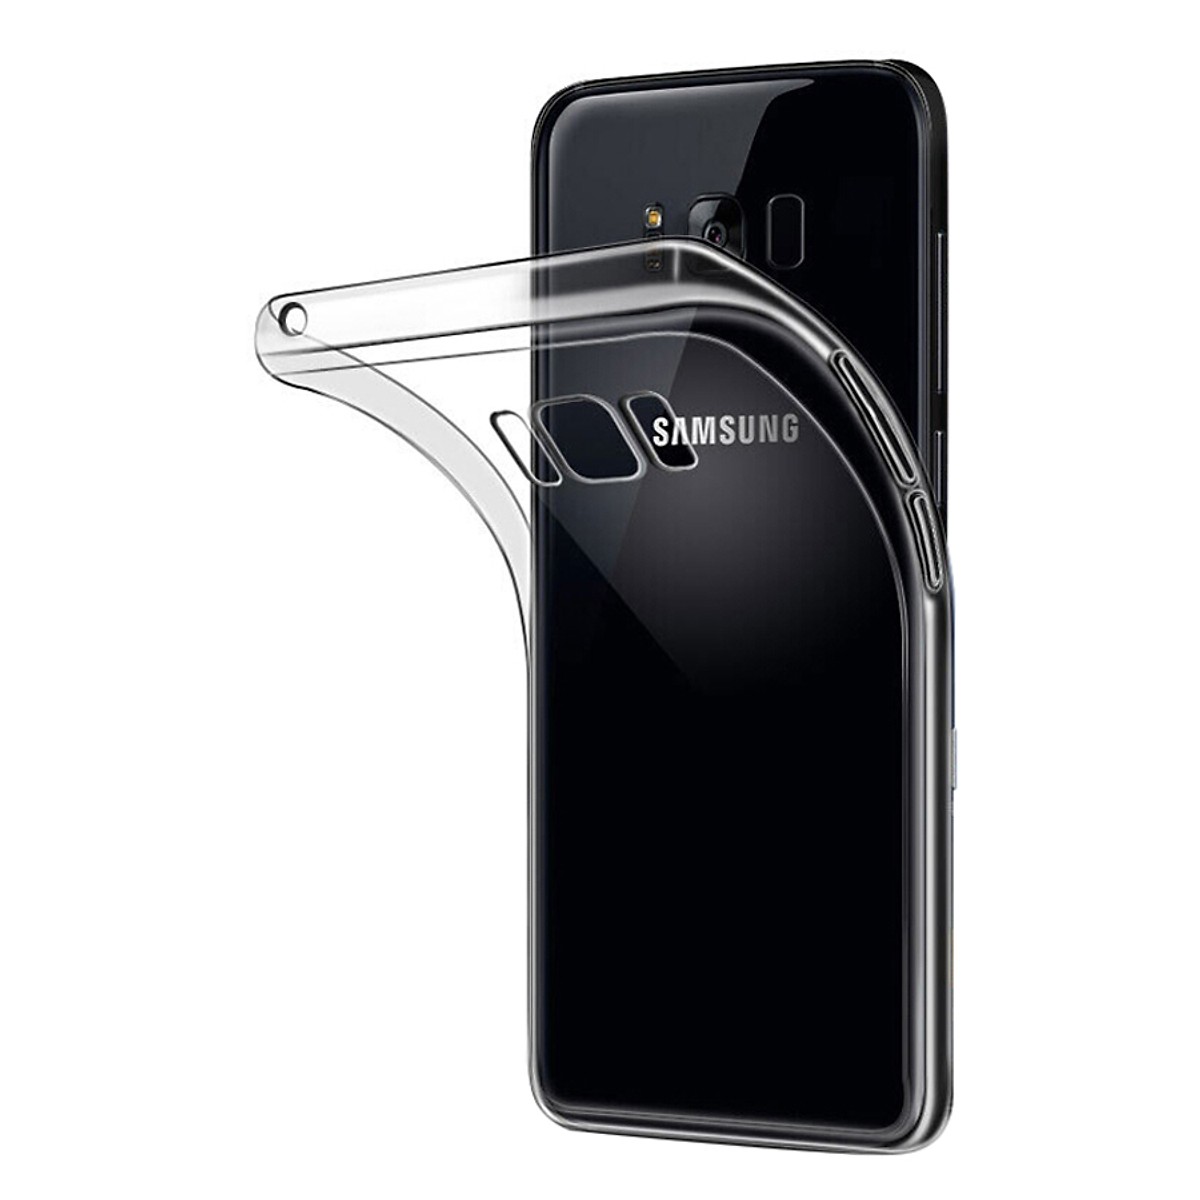 Ốp dẻo silicon dành cho Samsung S8 - Trong suốt